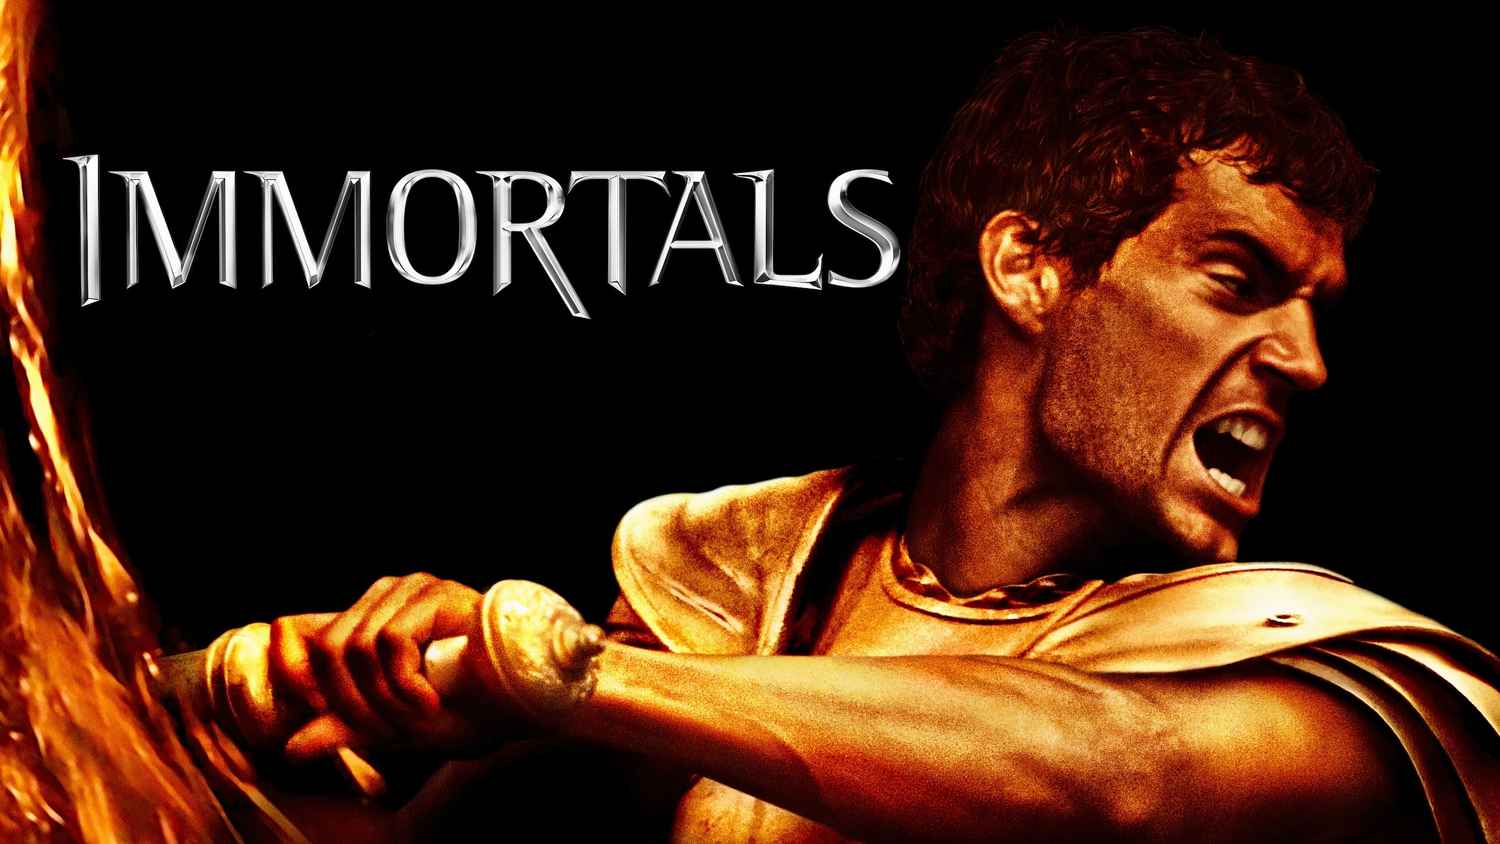 immortals full movie english